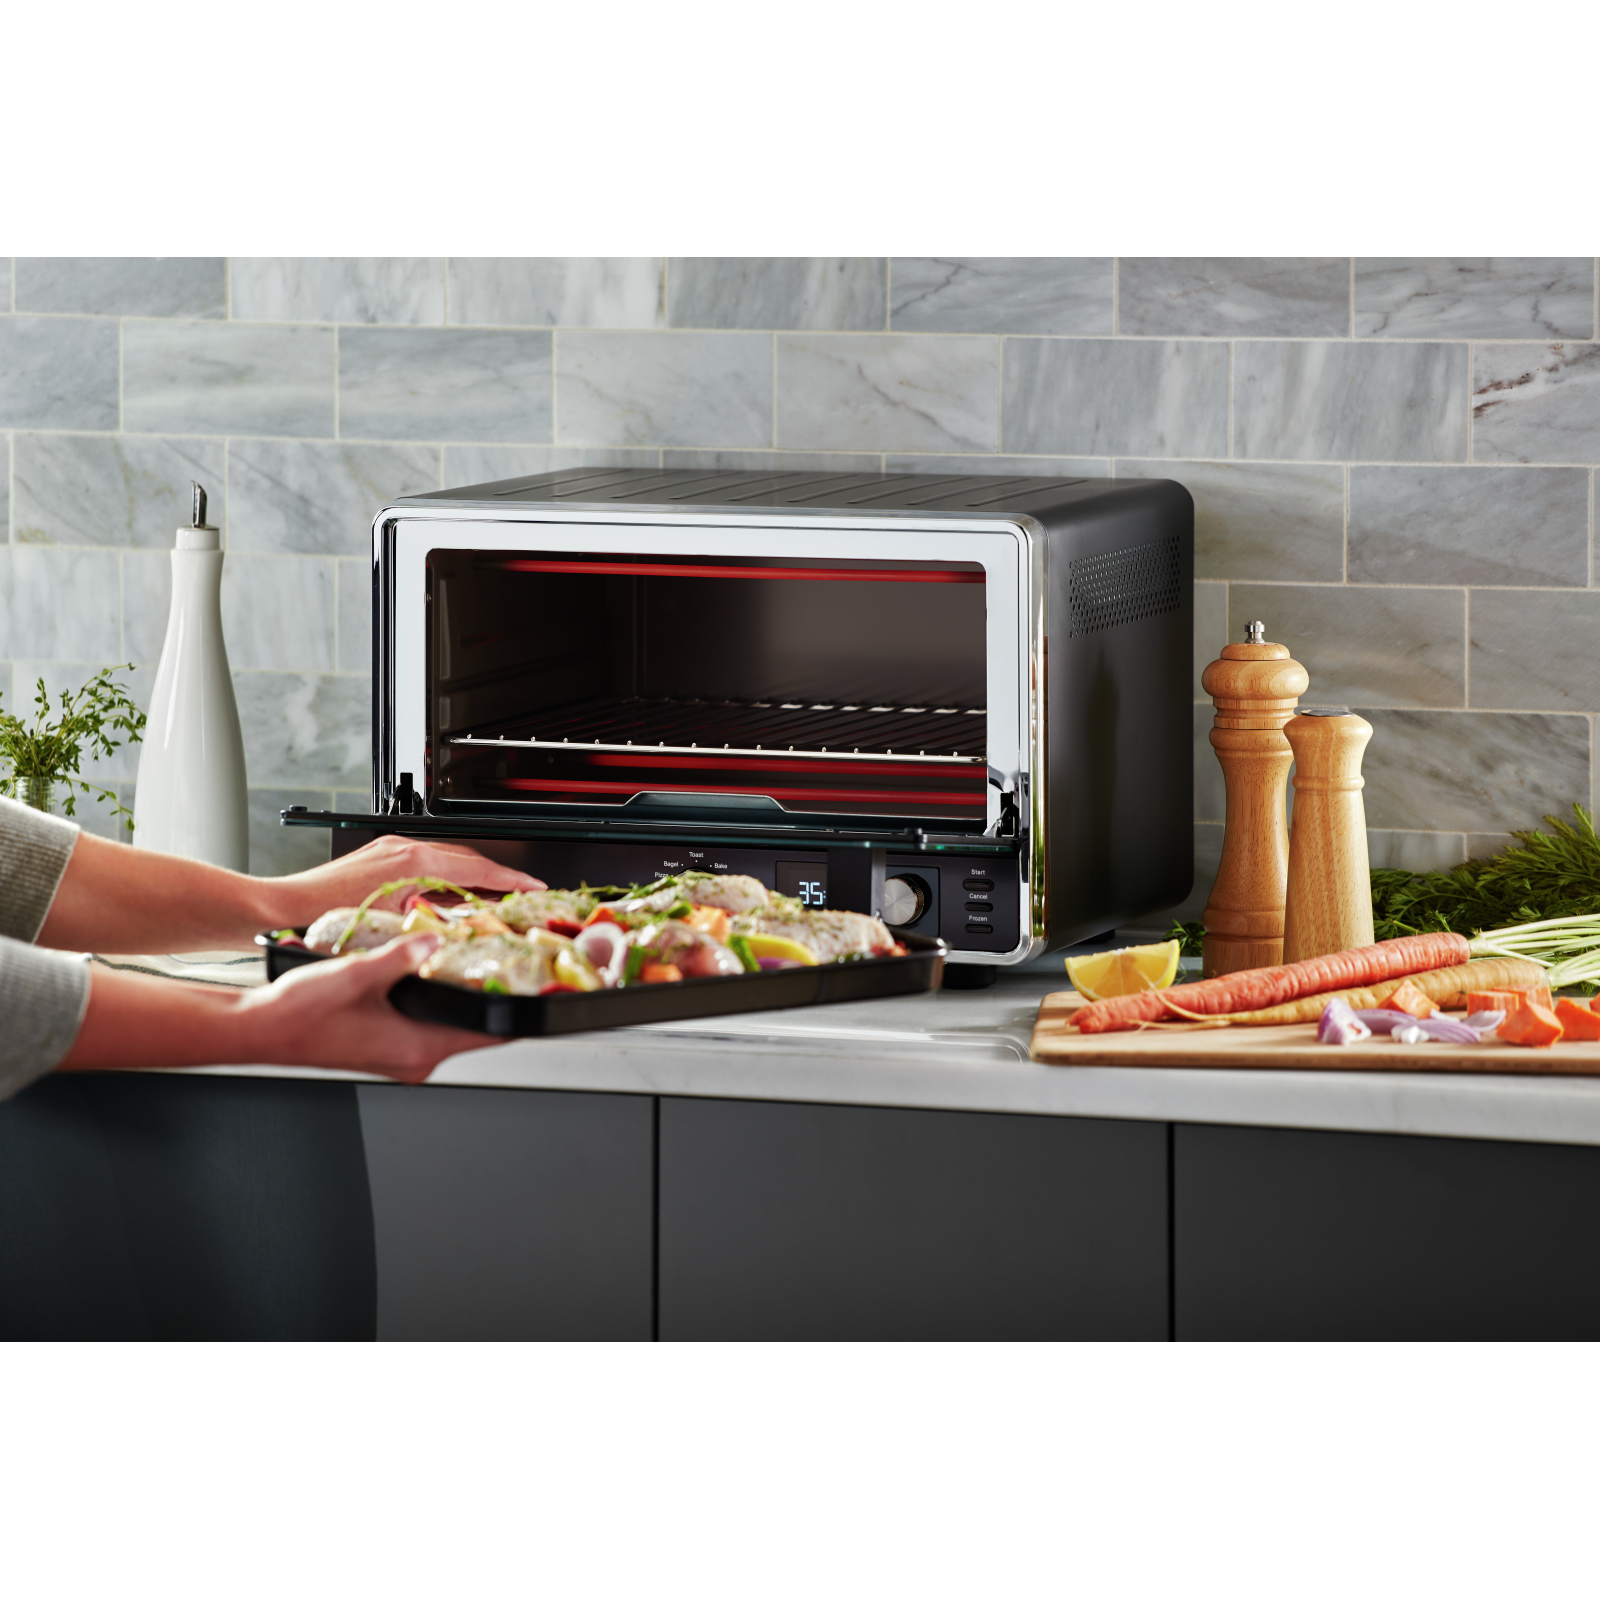 KitchenAid - Digital Countertop Oven in Black - KCO211BM